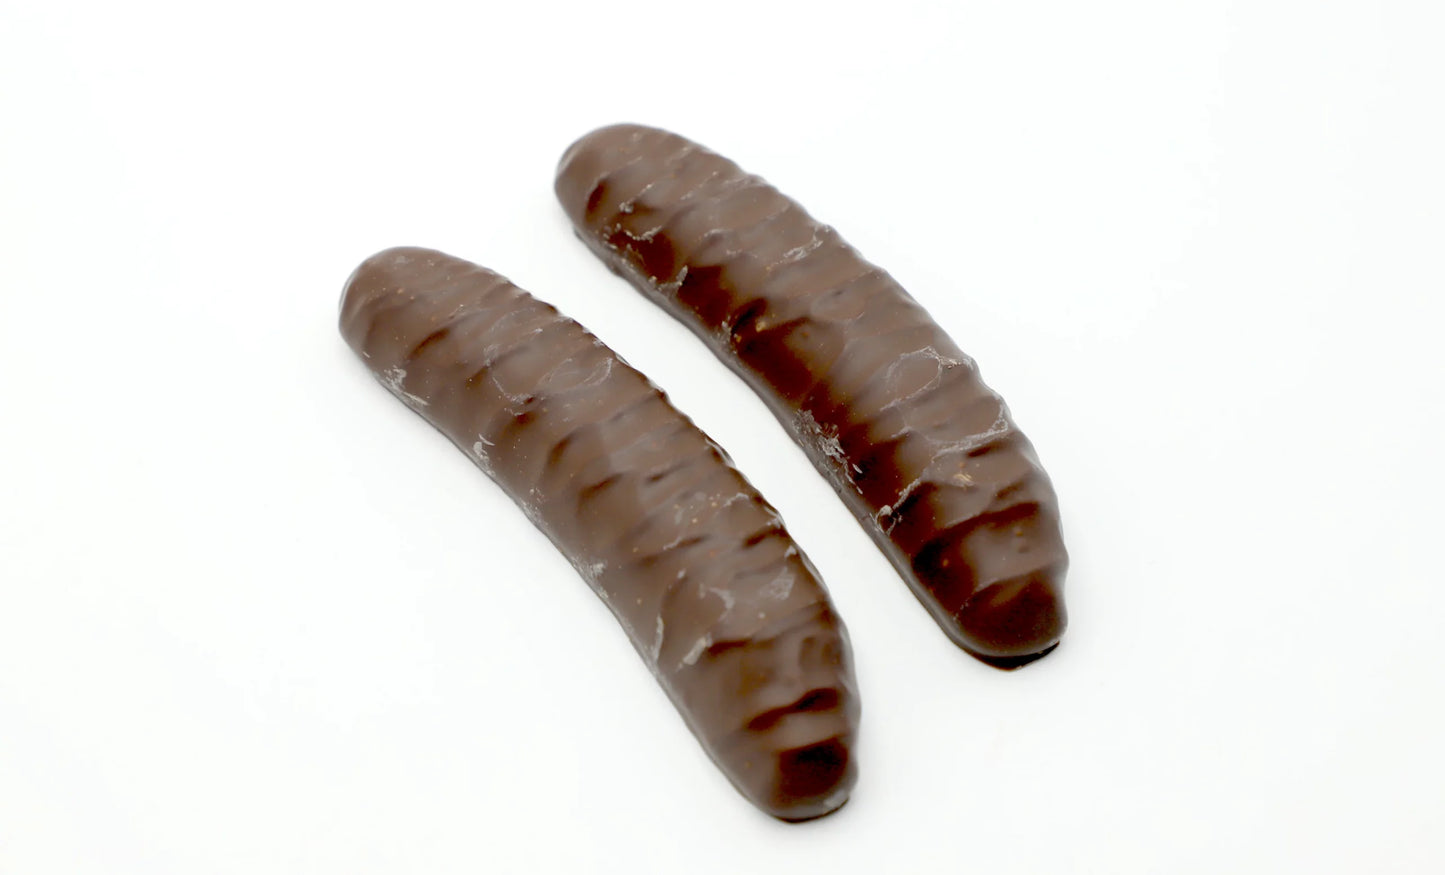 CHOCOLATE COVERED BANANAS (CARLETTI)